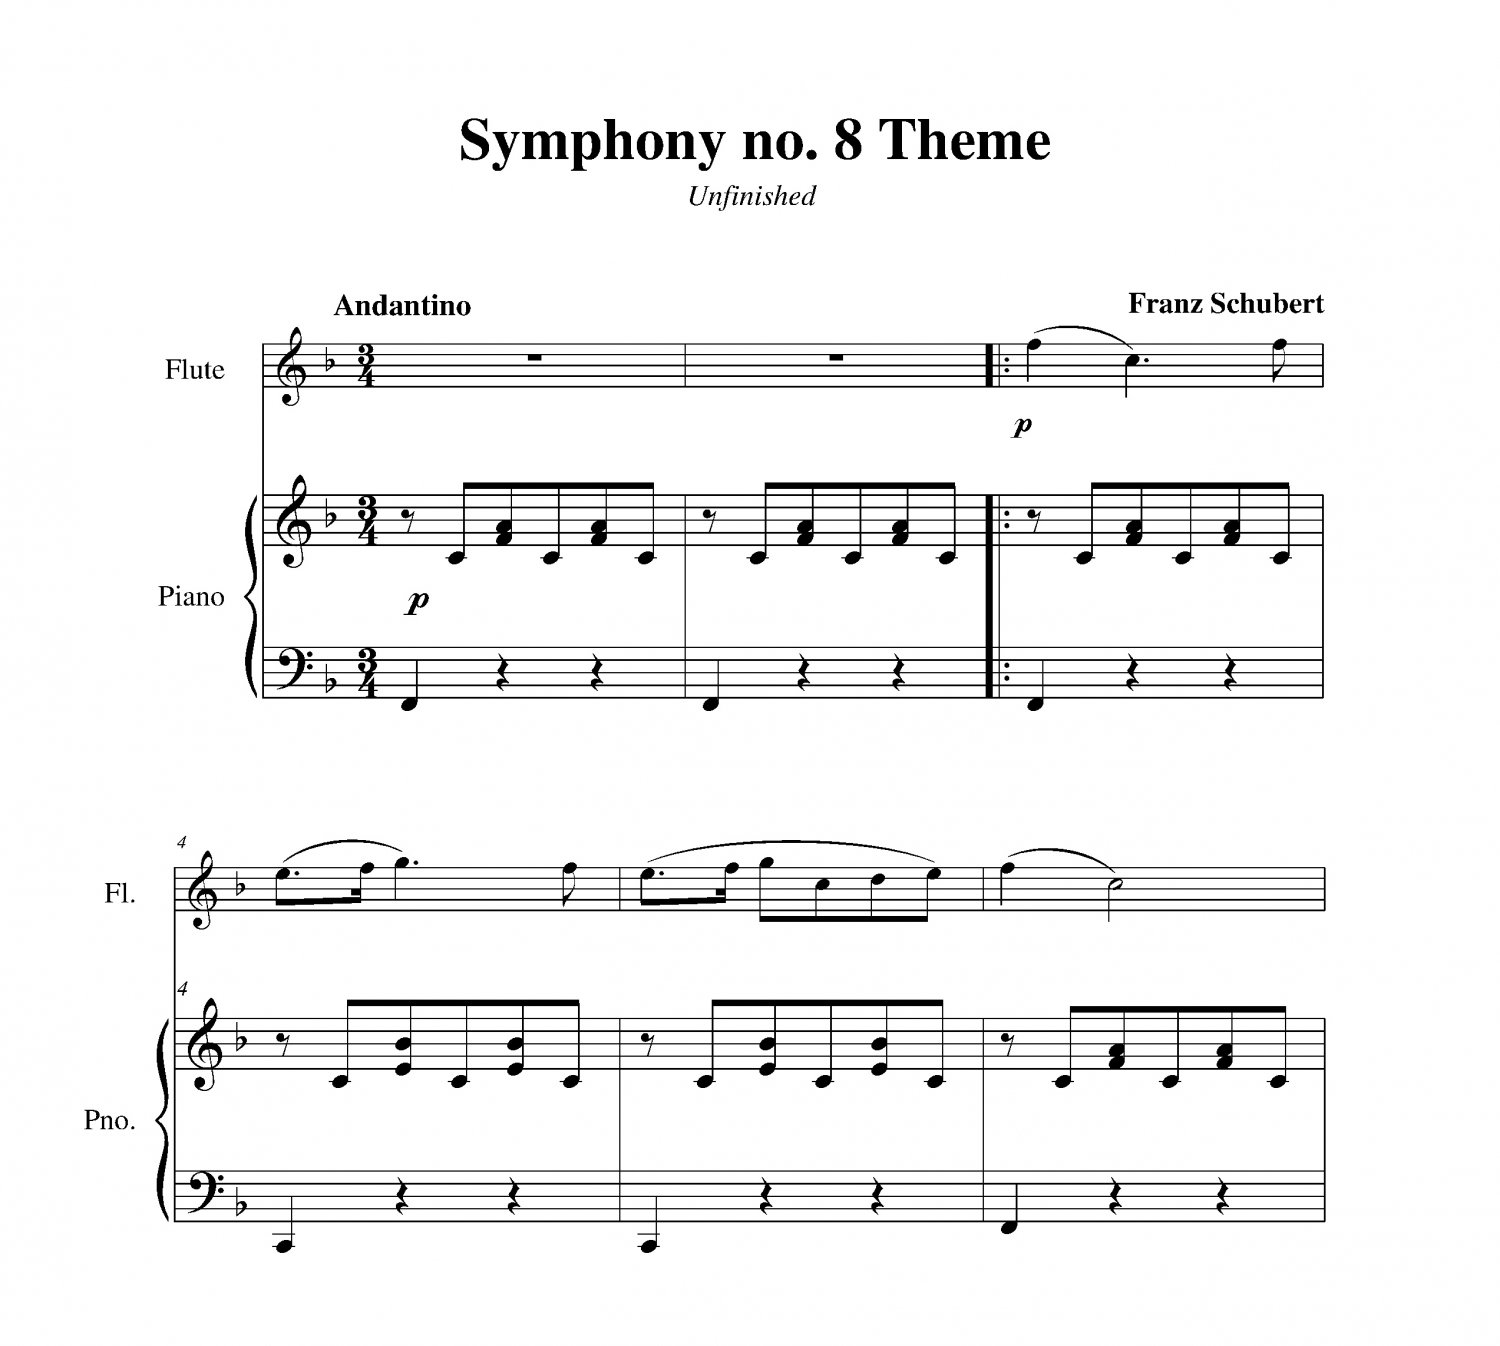 Schubert - Symphony no. 8 (Unfinished) (longer version)